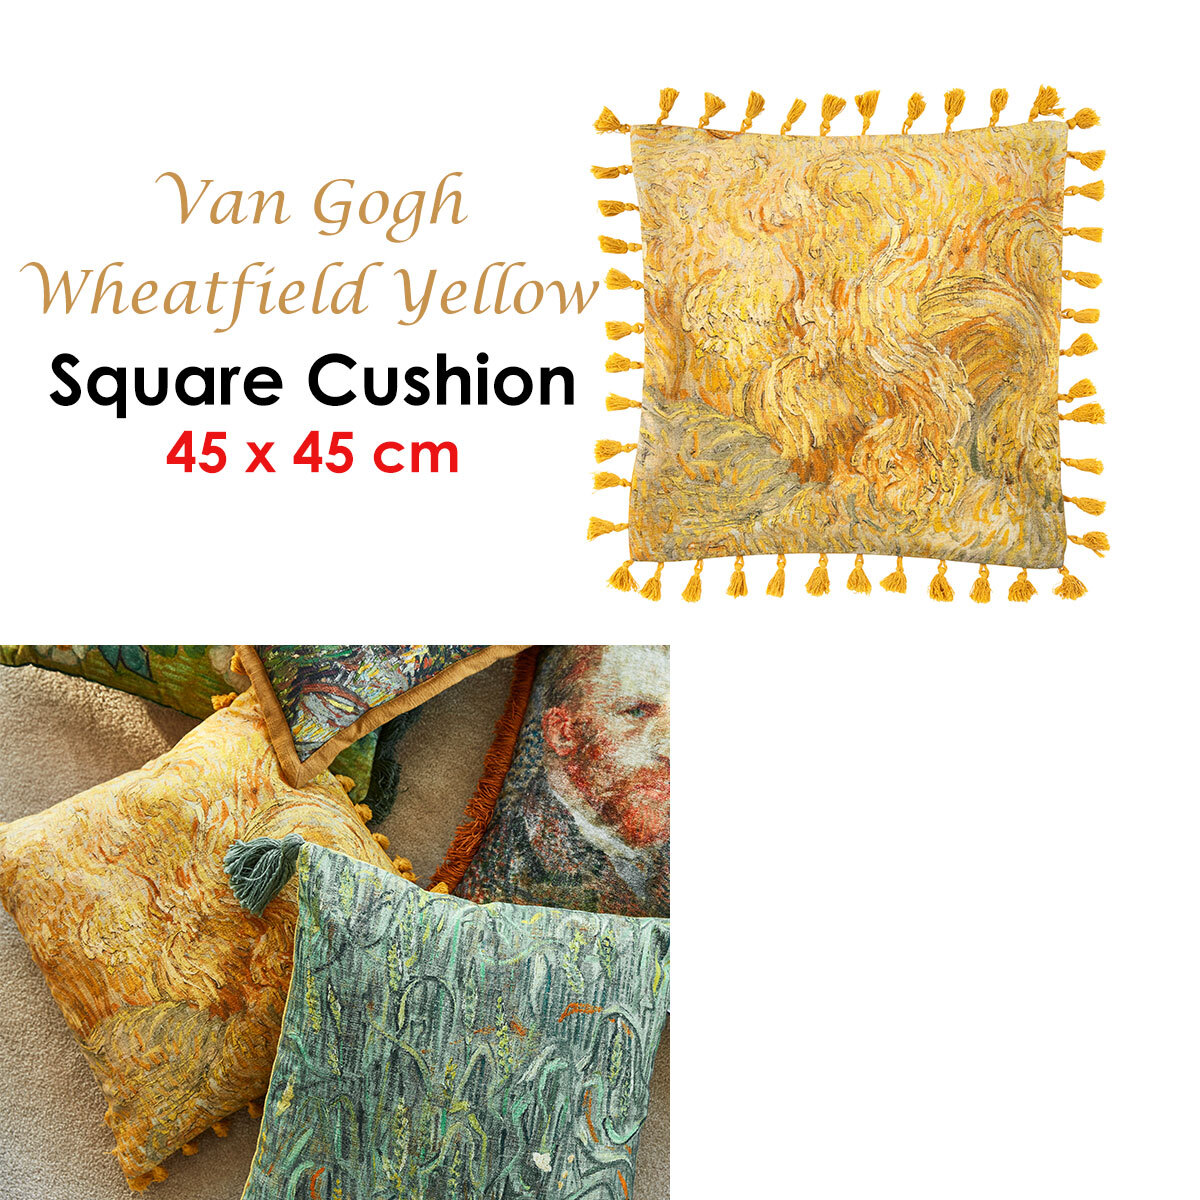 Bedding House Van Gogh Wheatfield Yellow Filled Square Cushion